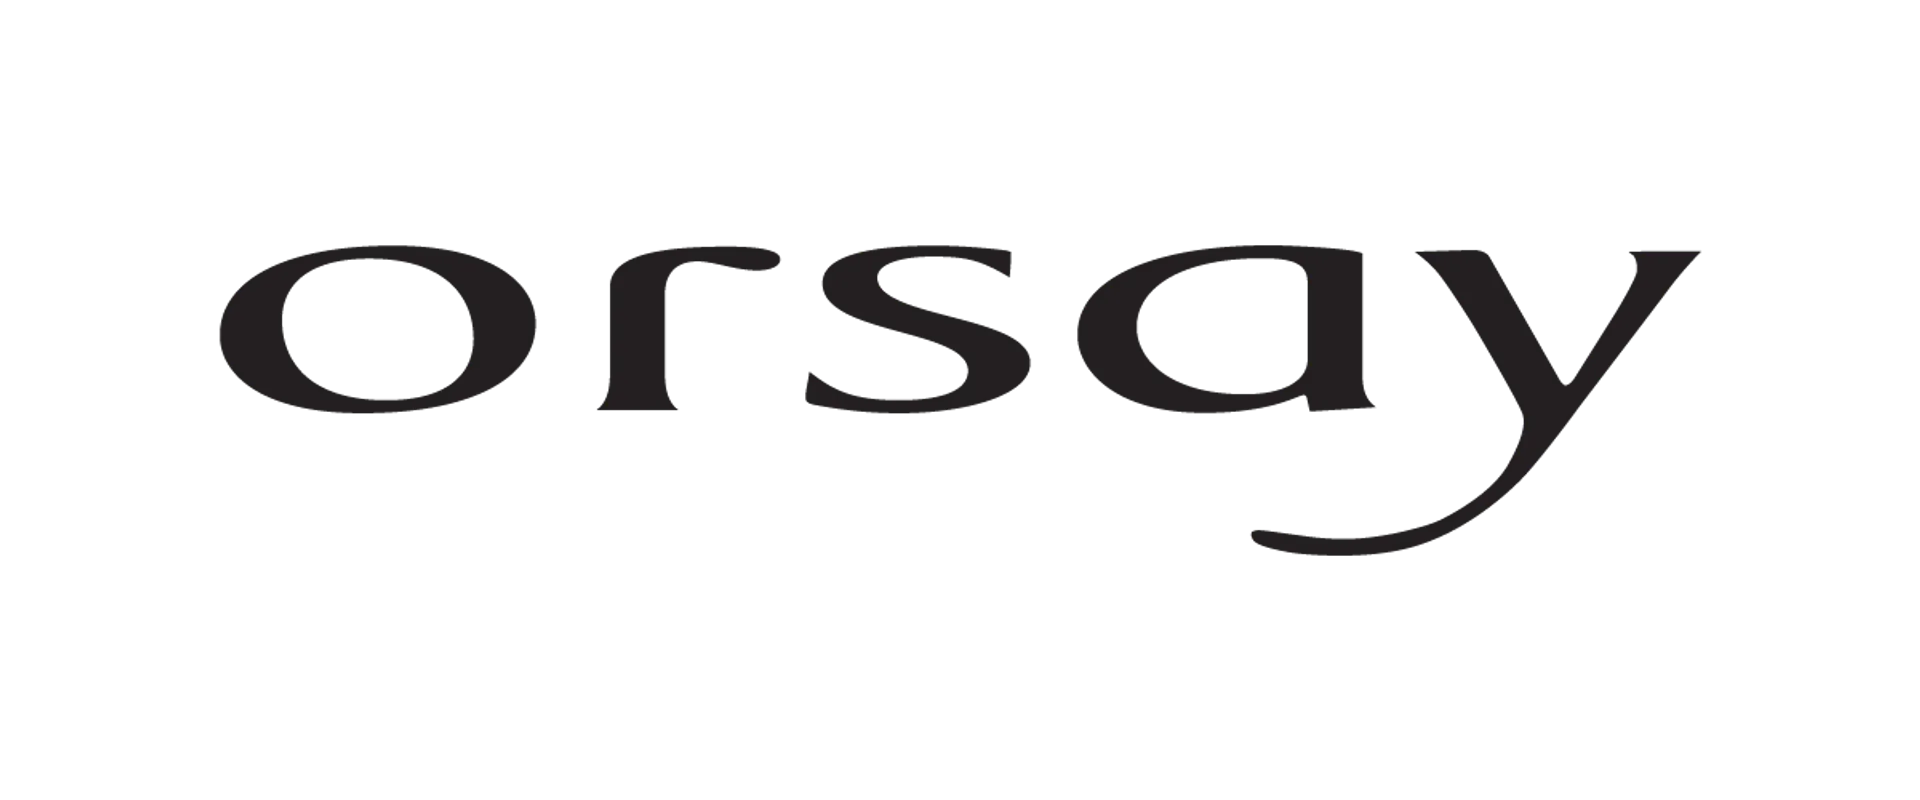 ORSAY logo